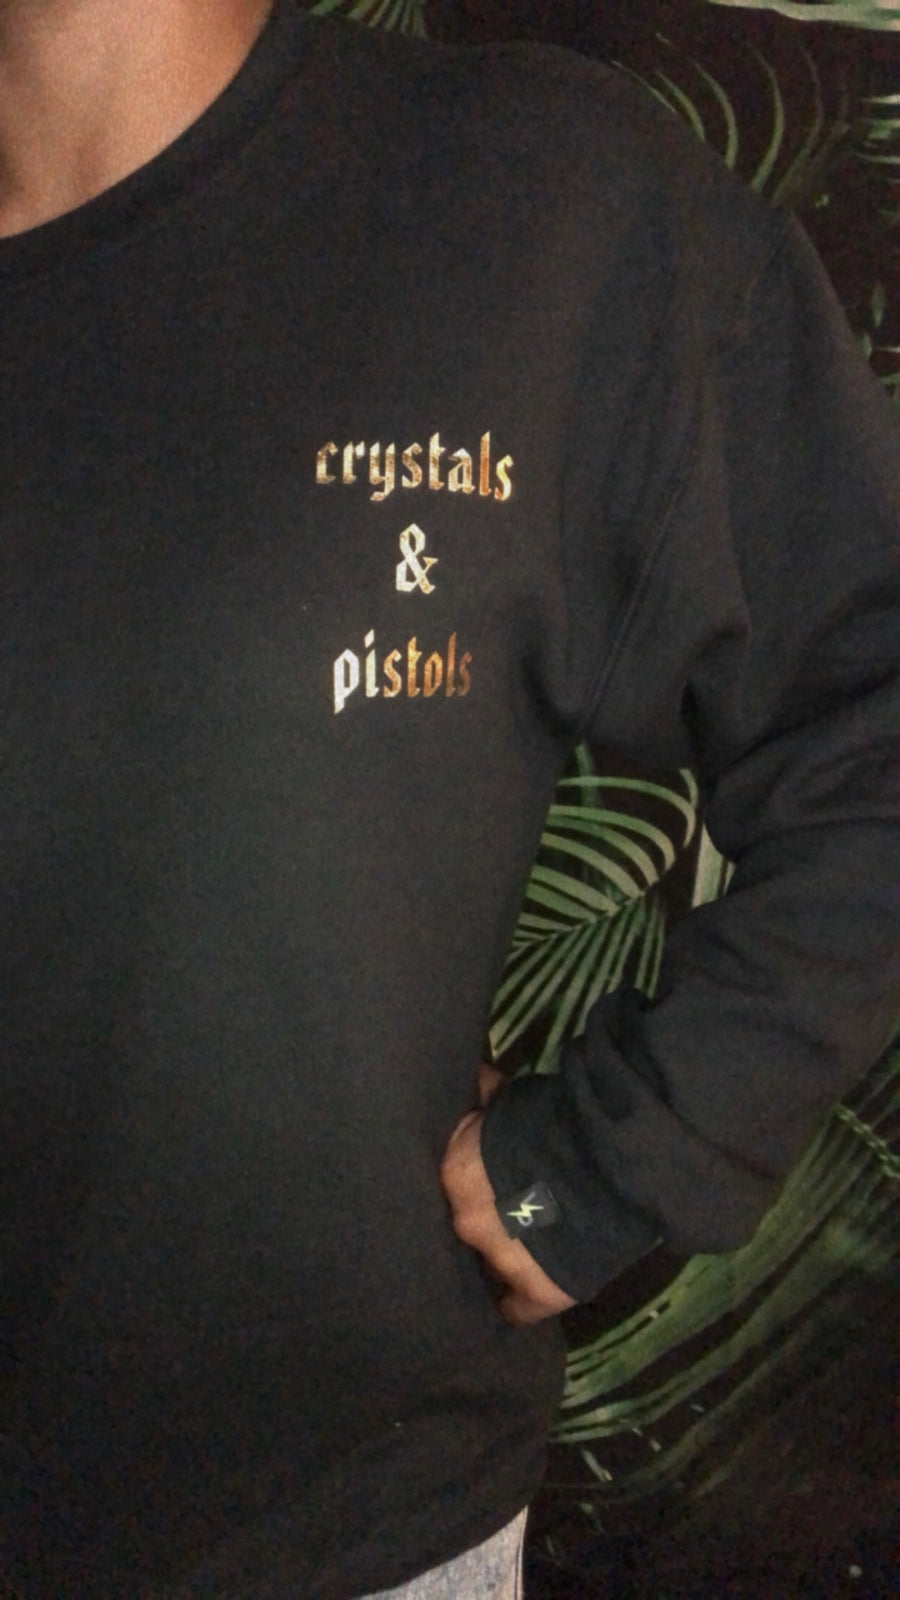 Crystals & Pistols